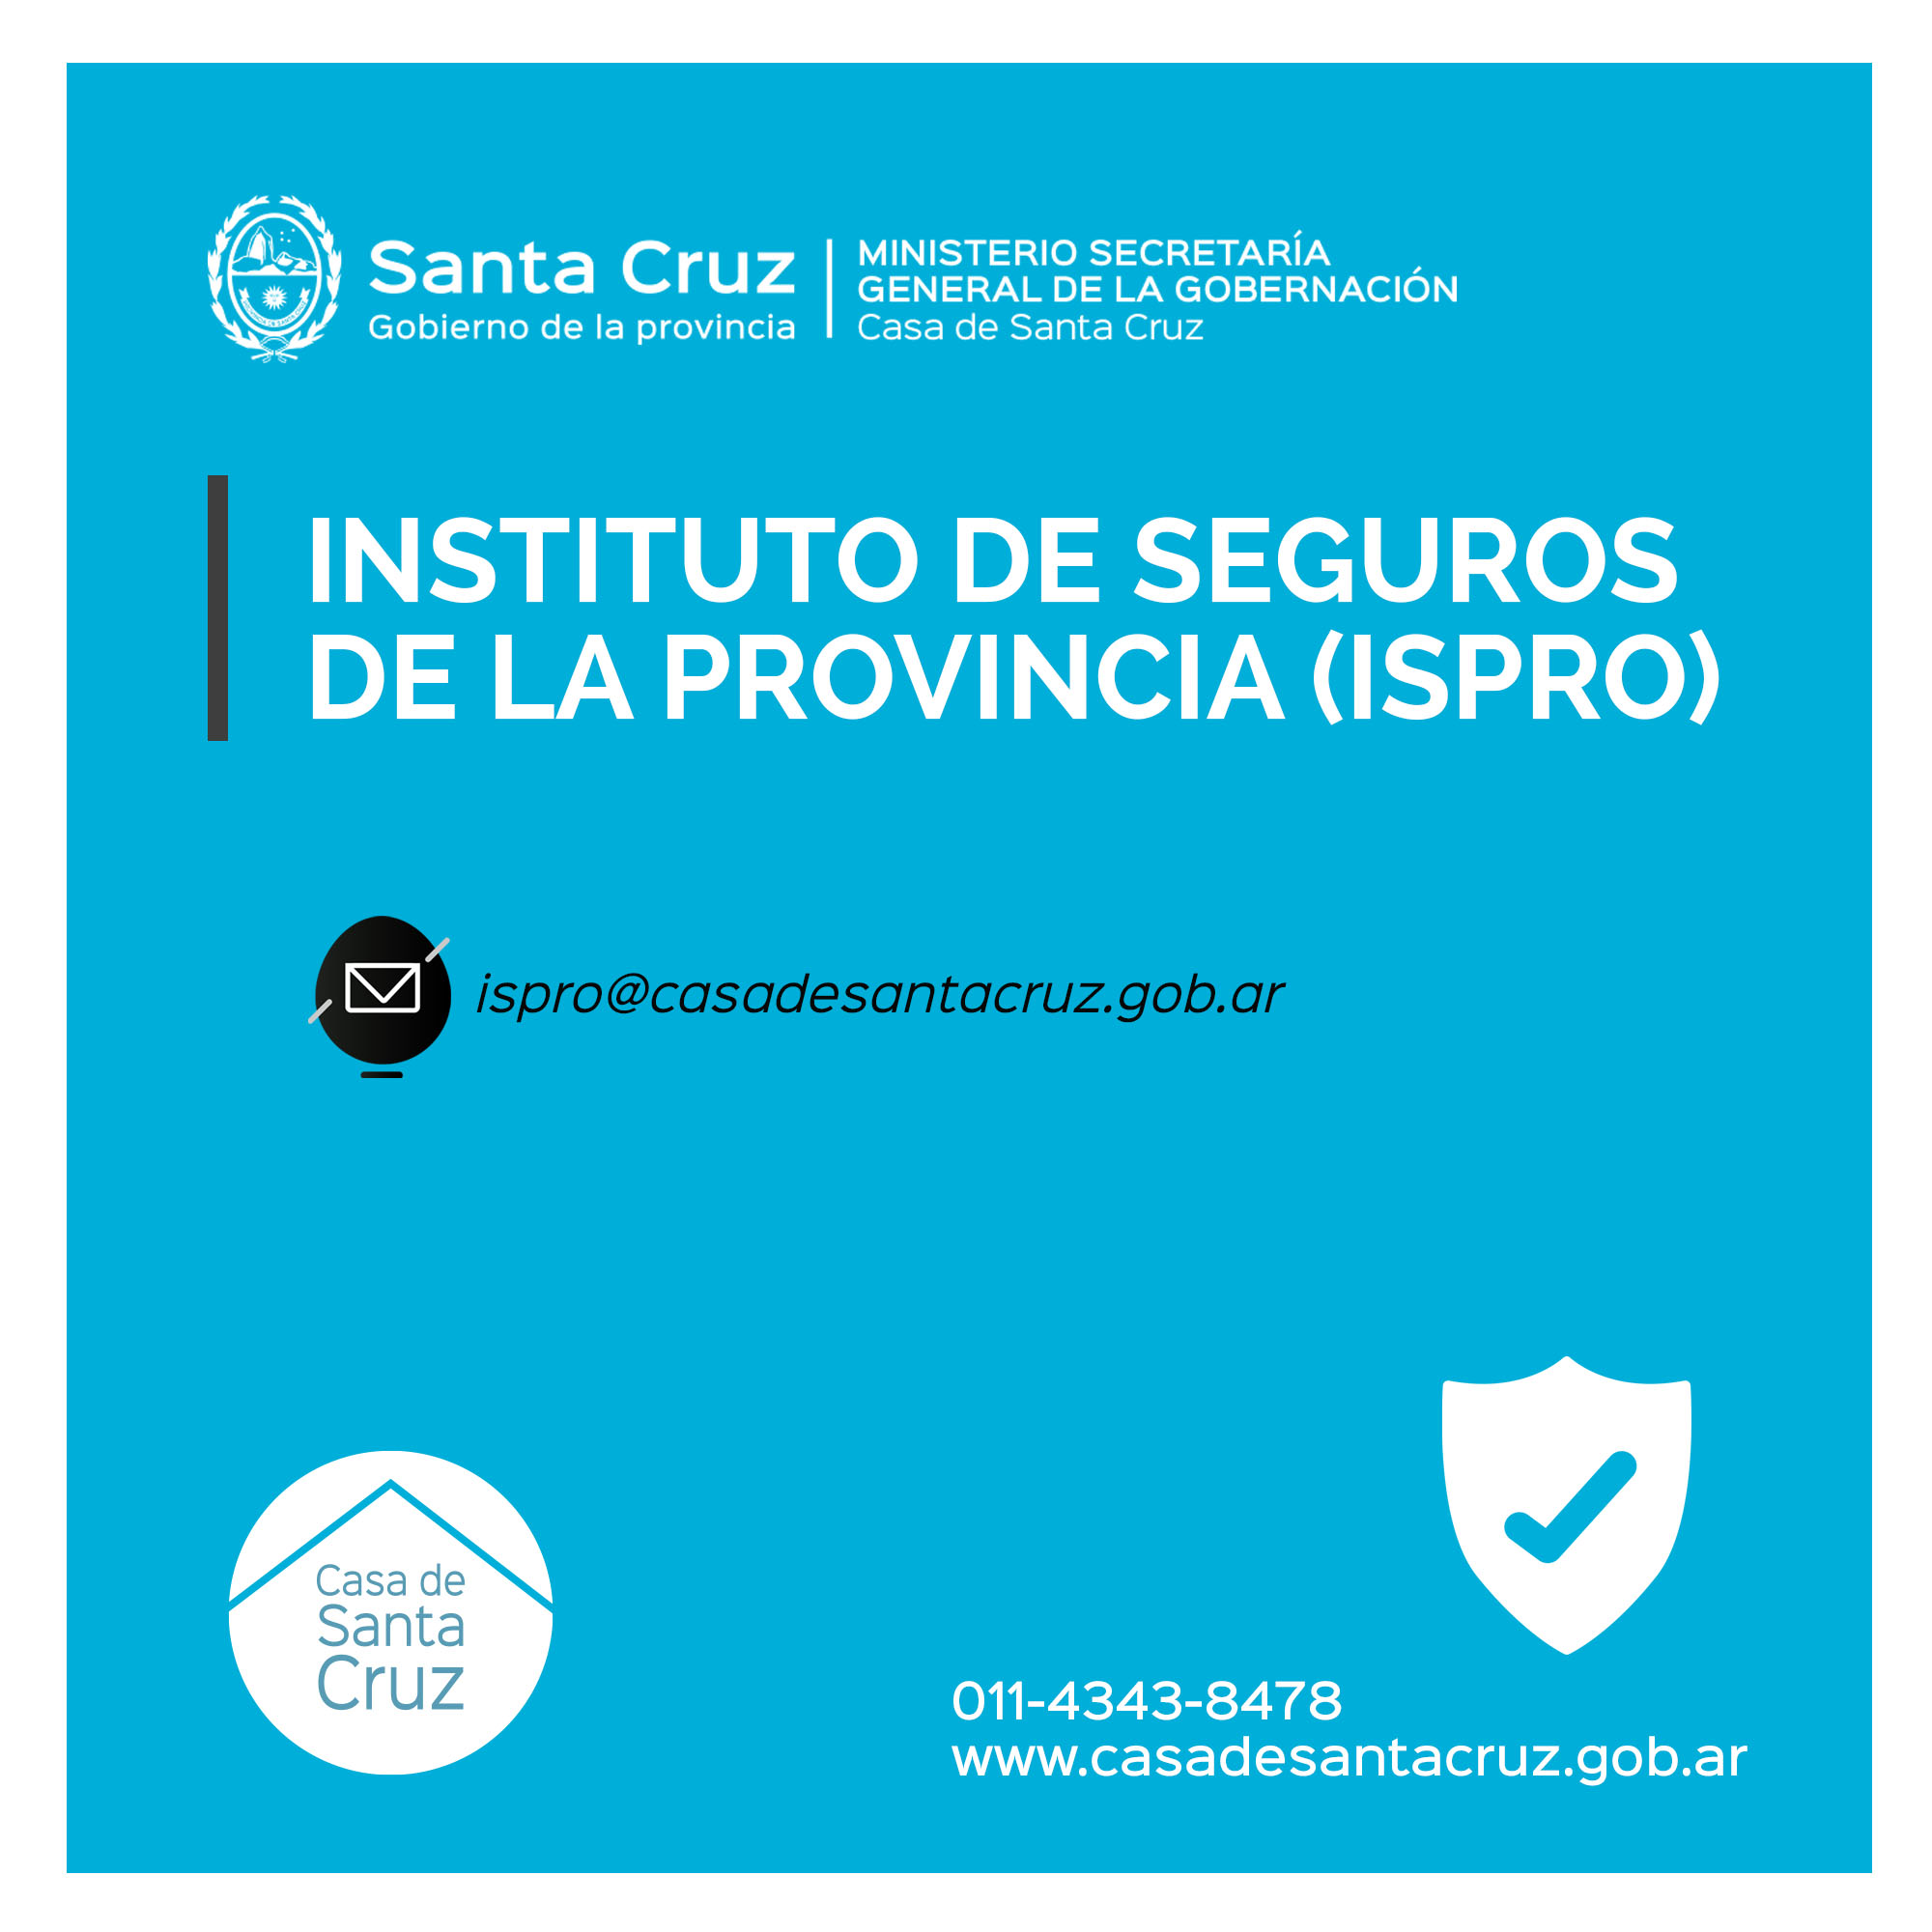 Instituto de Seguros de la Provincia (ISPRO)